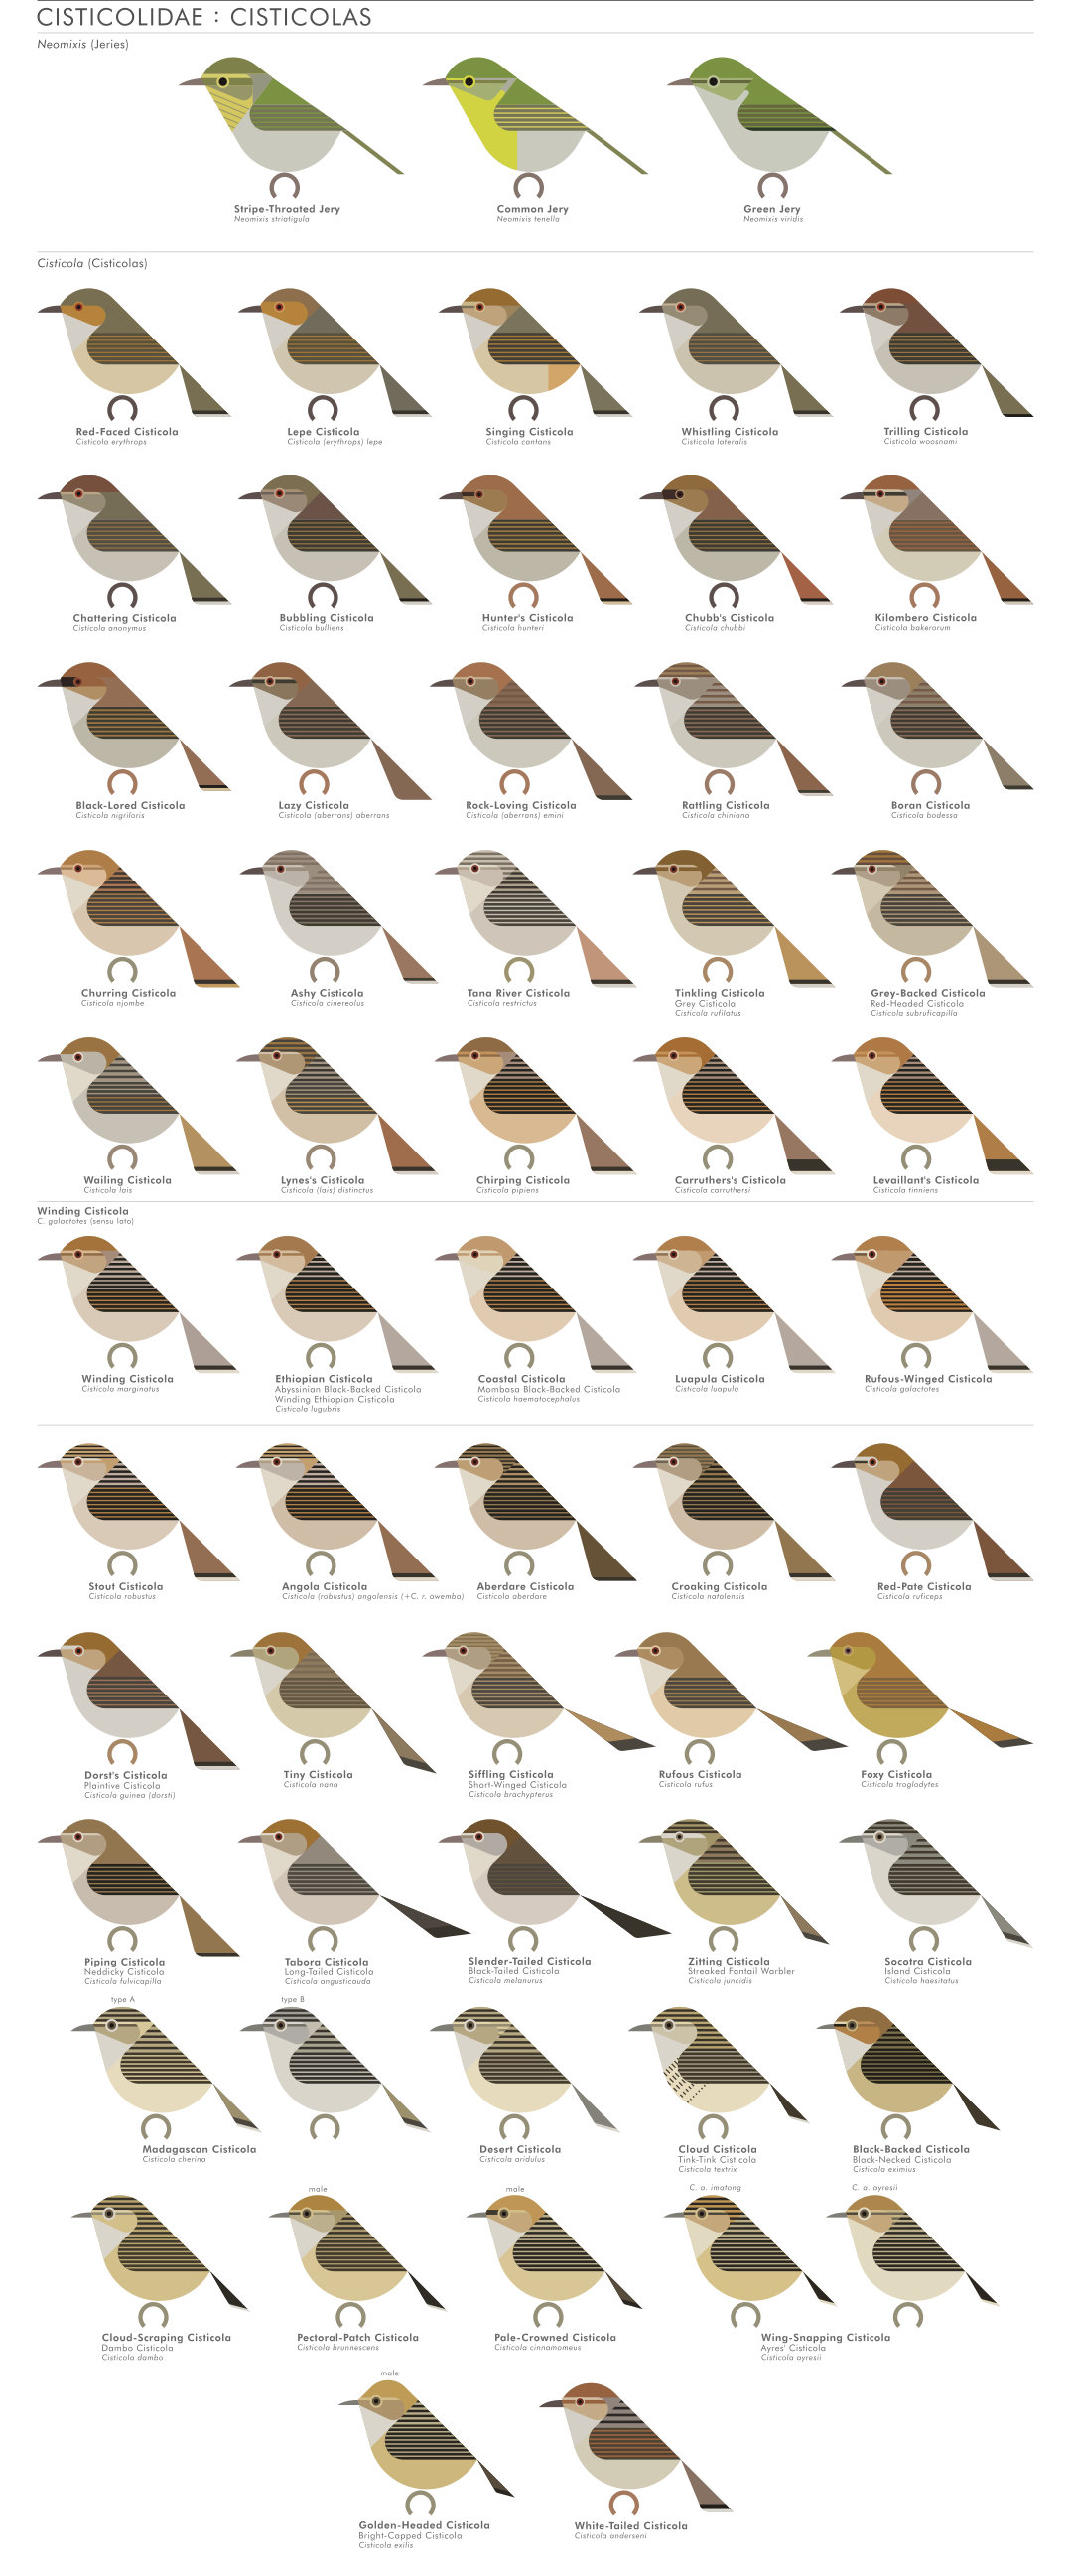 scott partridge - AVE - avian vector encyclopedia - cisticolas - bird vector art